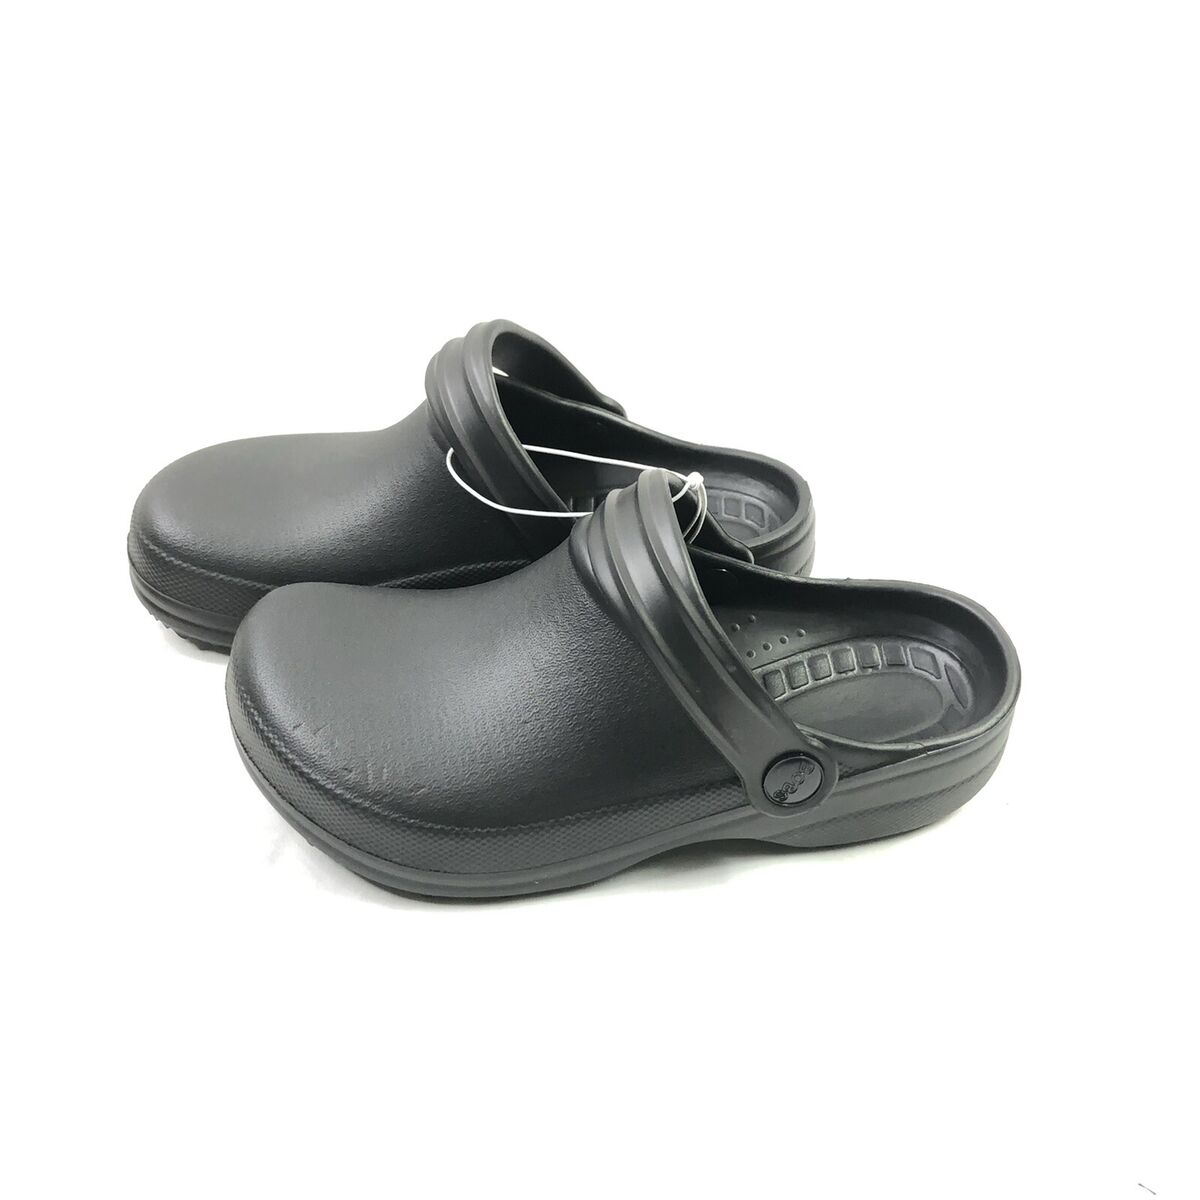 Skechers Bobs Black Croc Shoes Big Girls Youth 3 Size Up | eBay